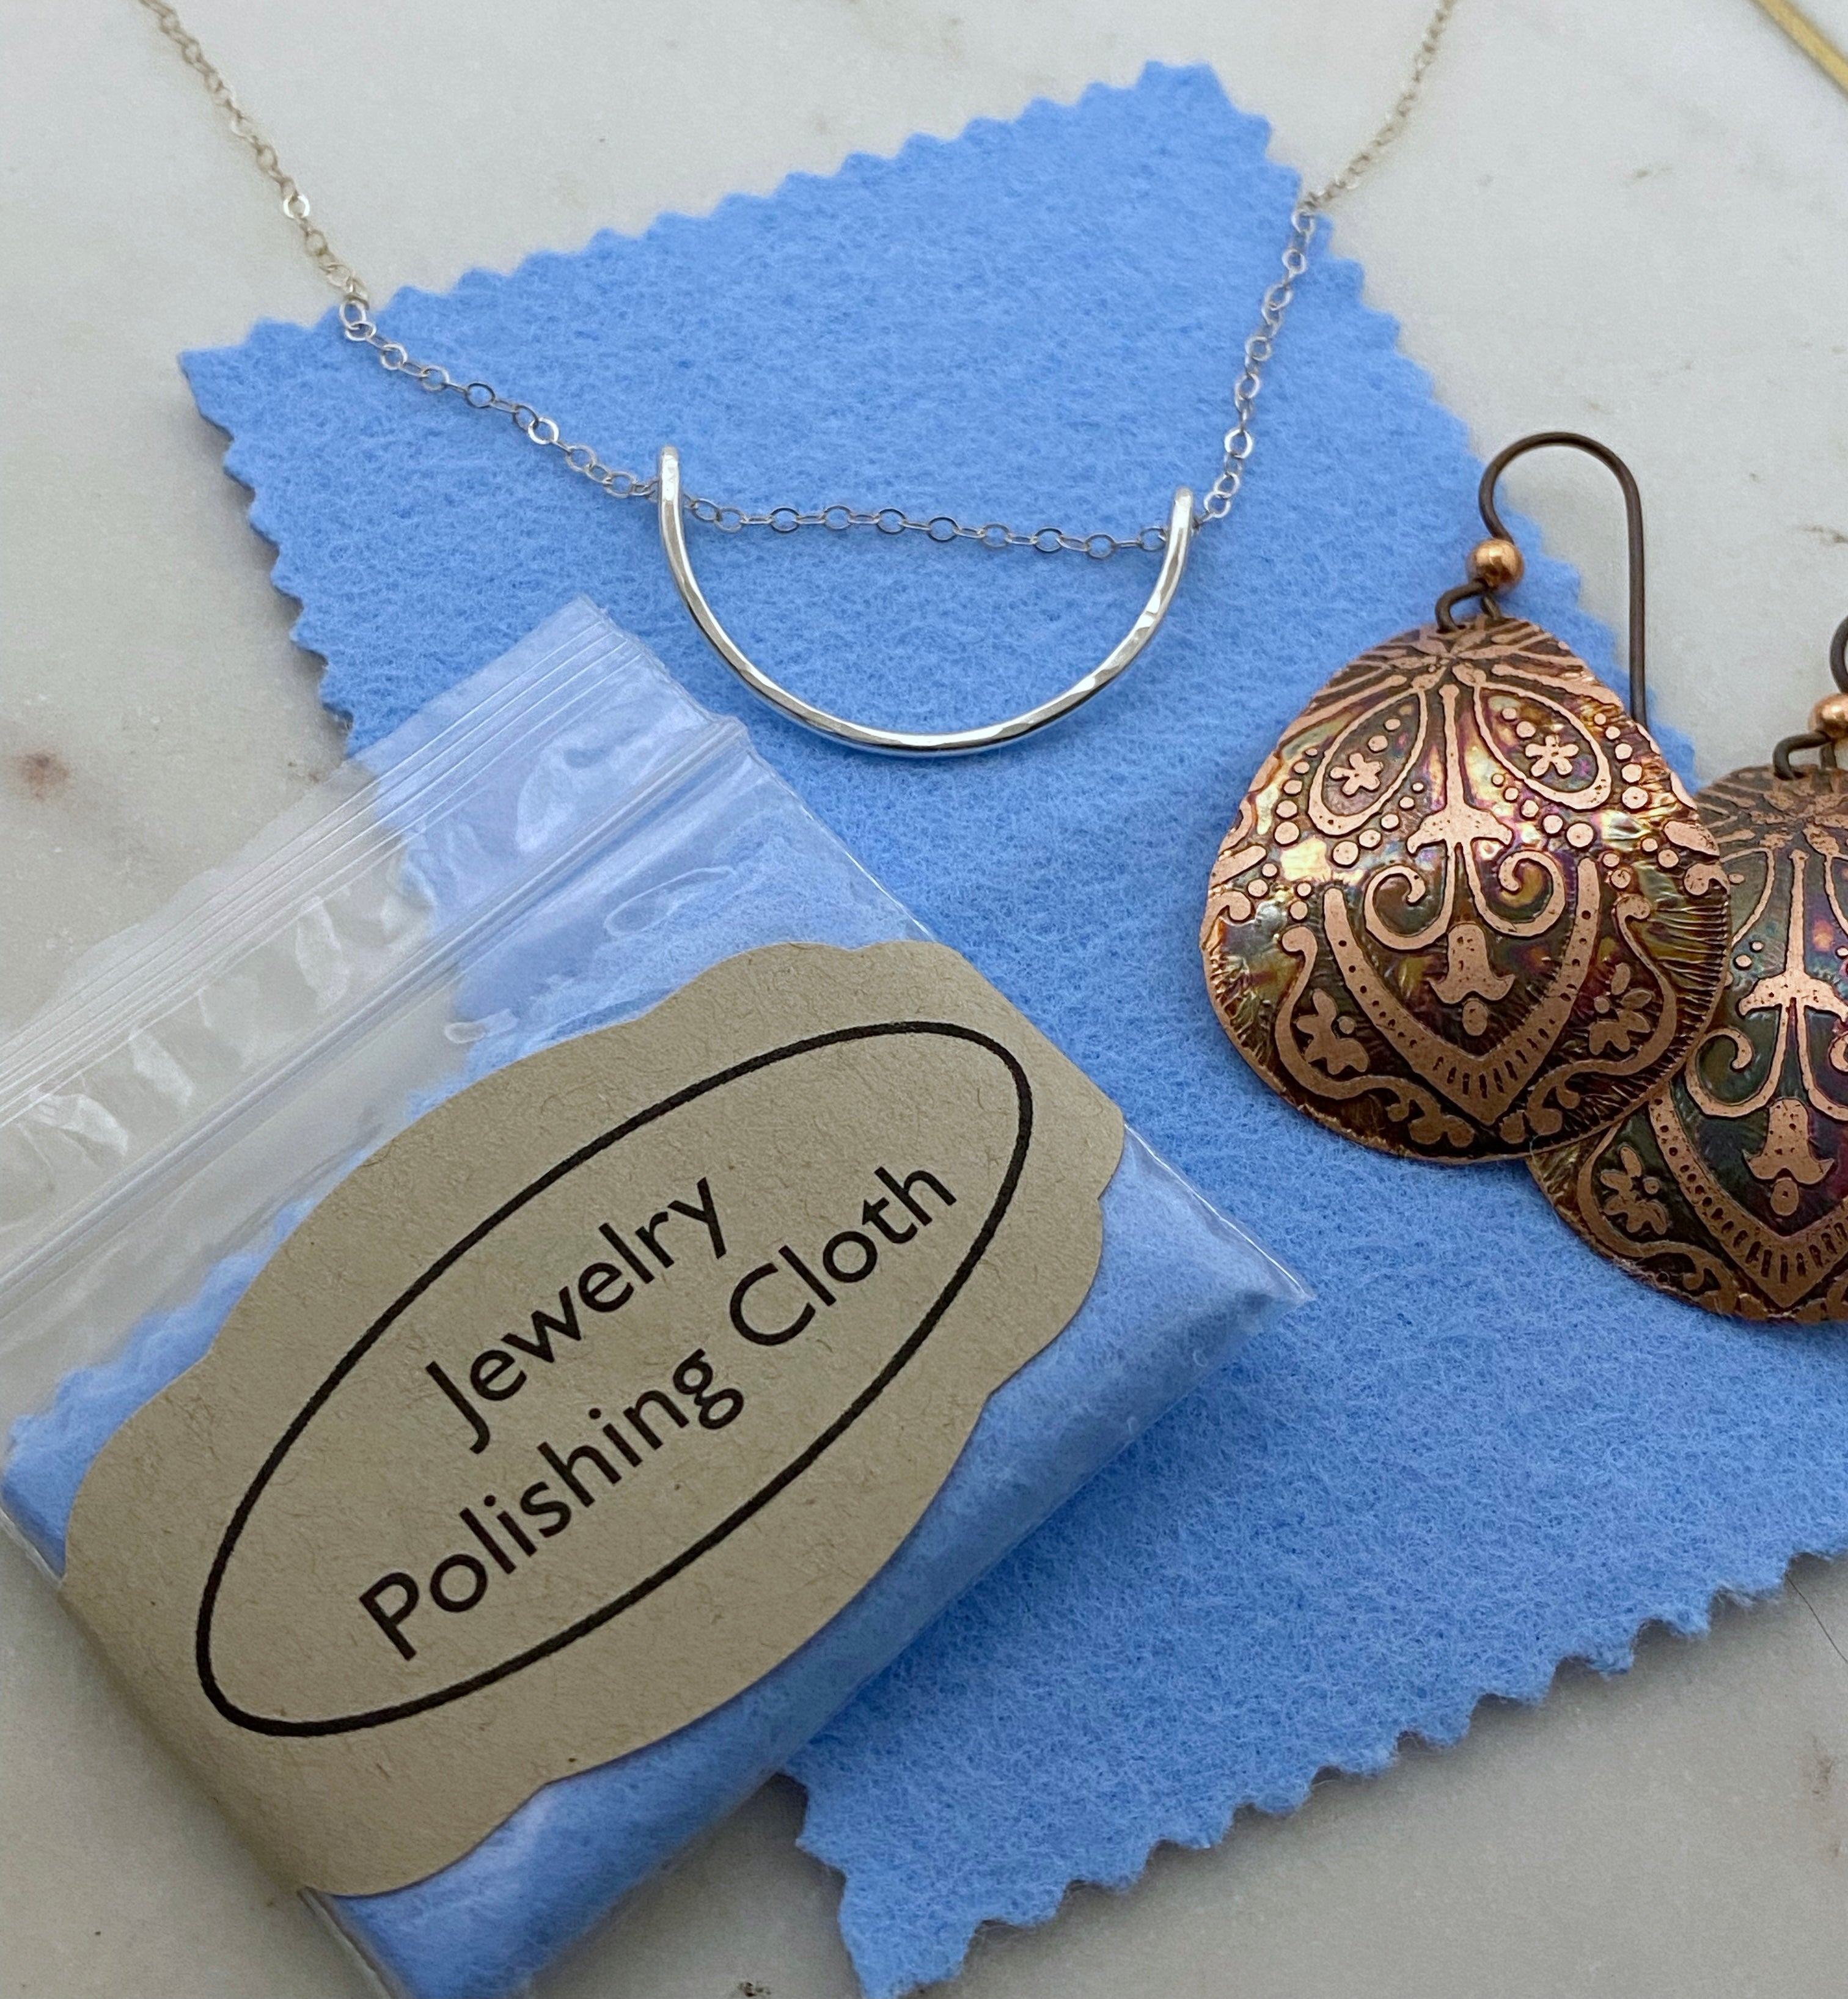 Jewelry polishing cloth – Artisan Jewelry by Erica Gooding